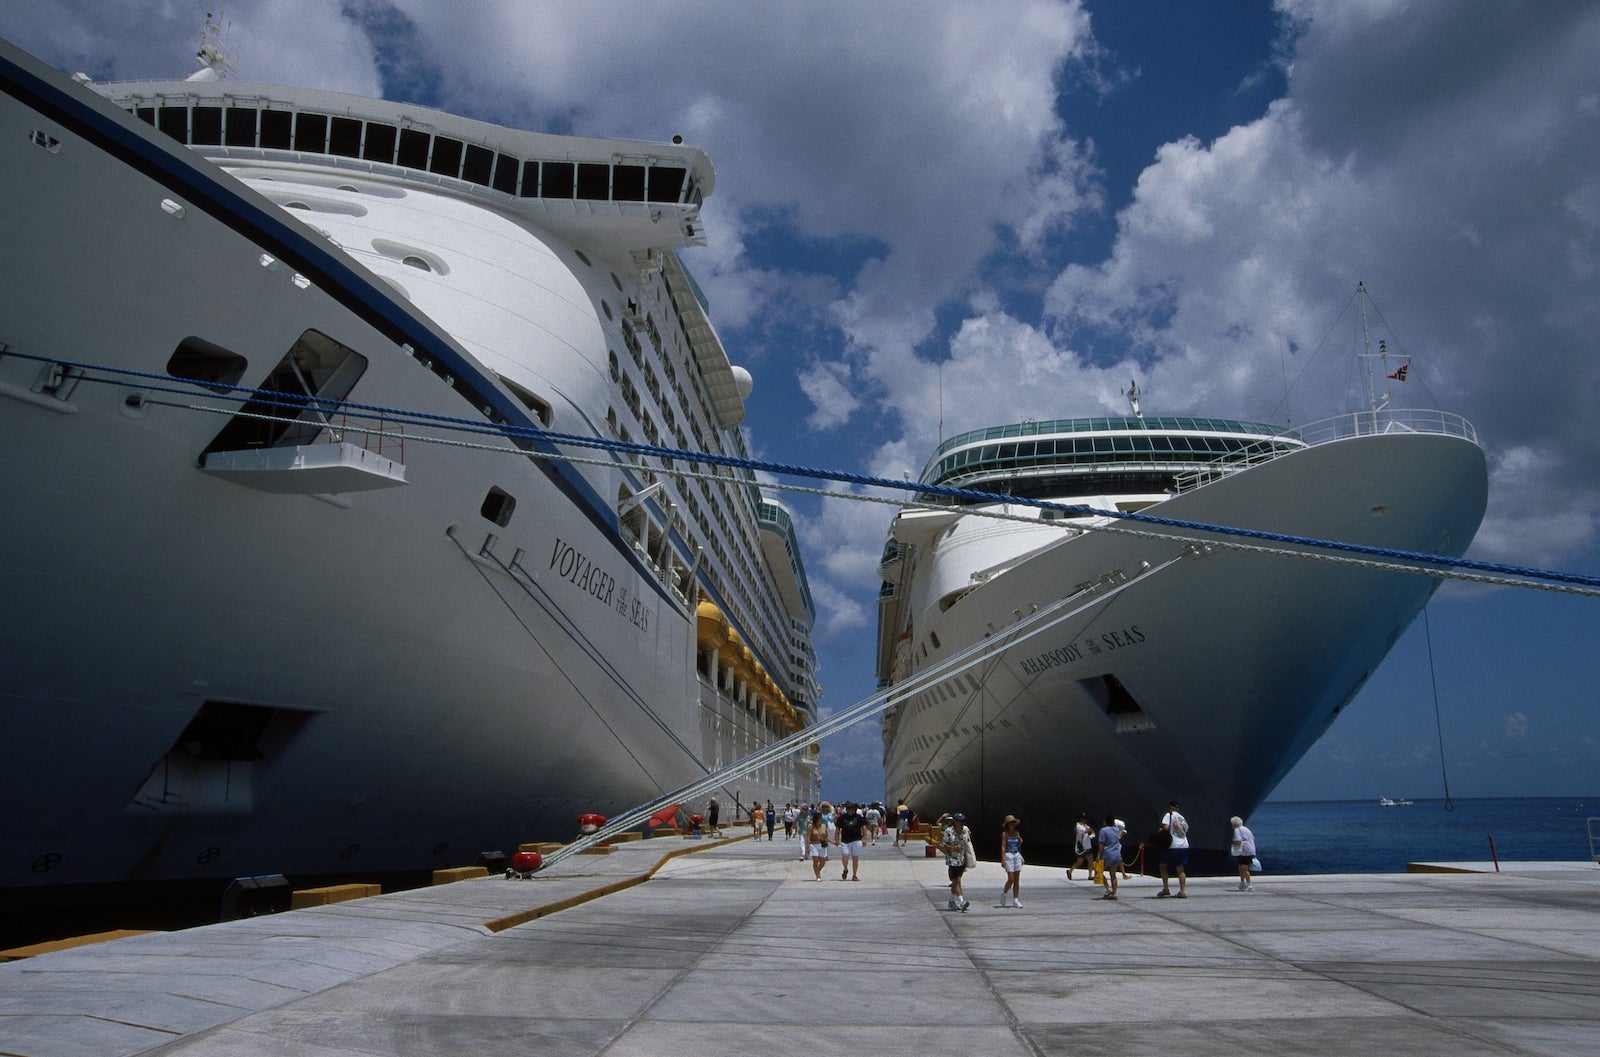 cruise ship maritime law